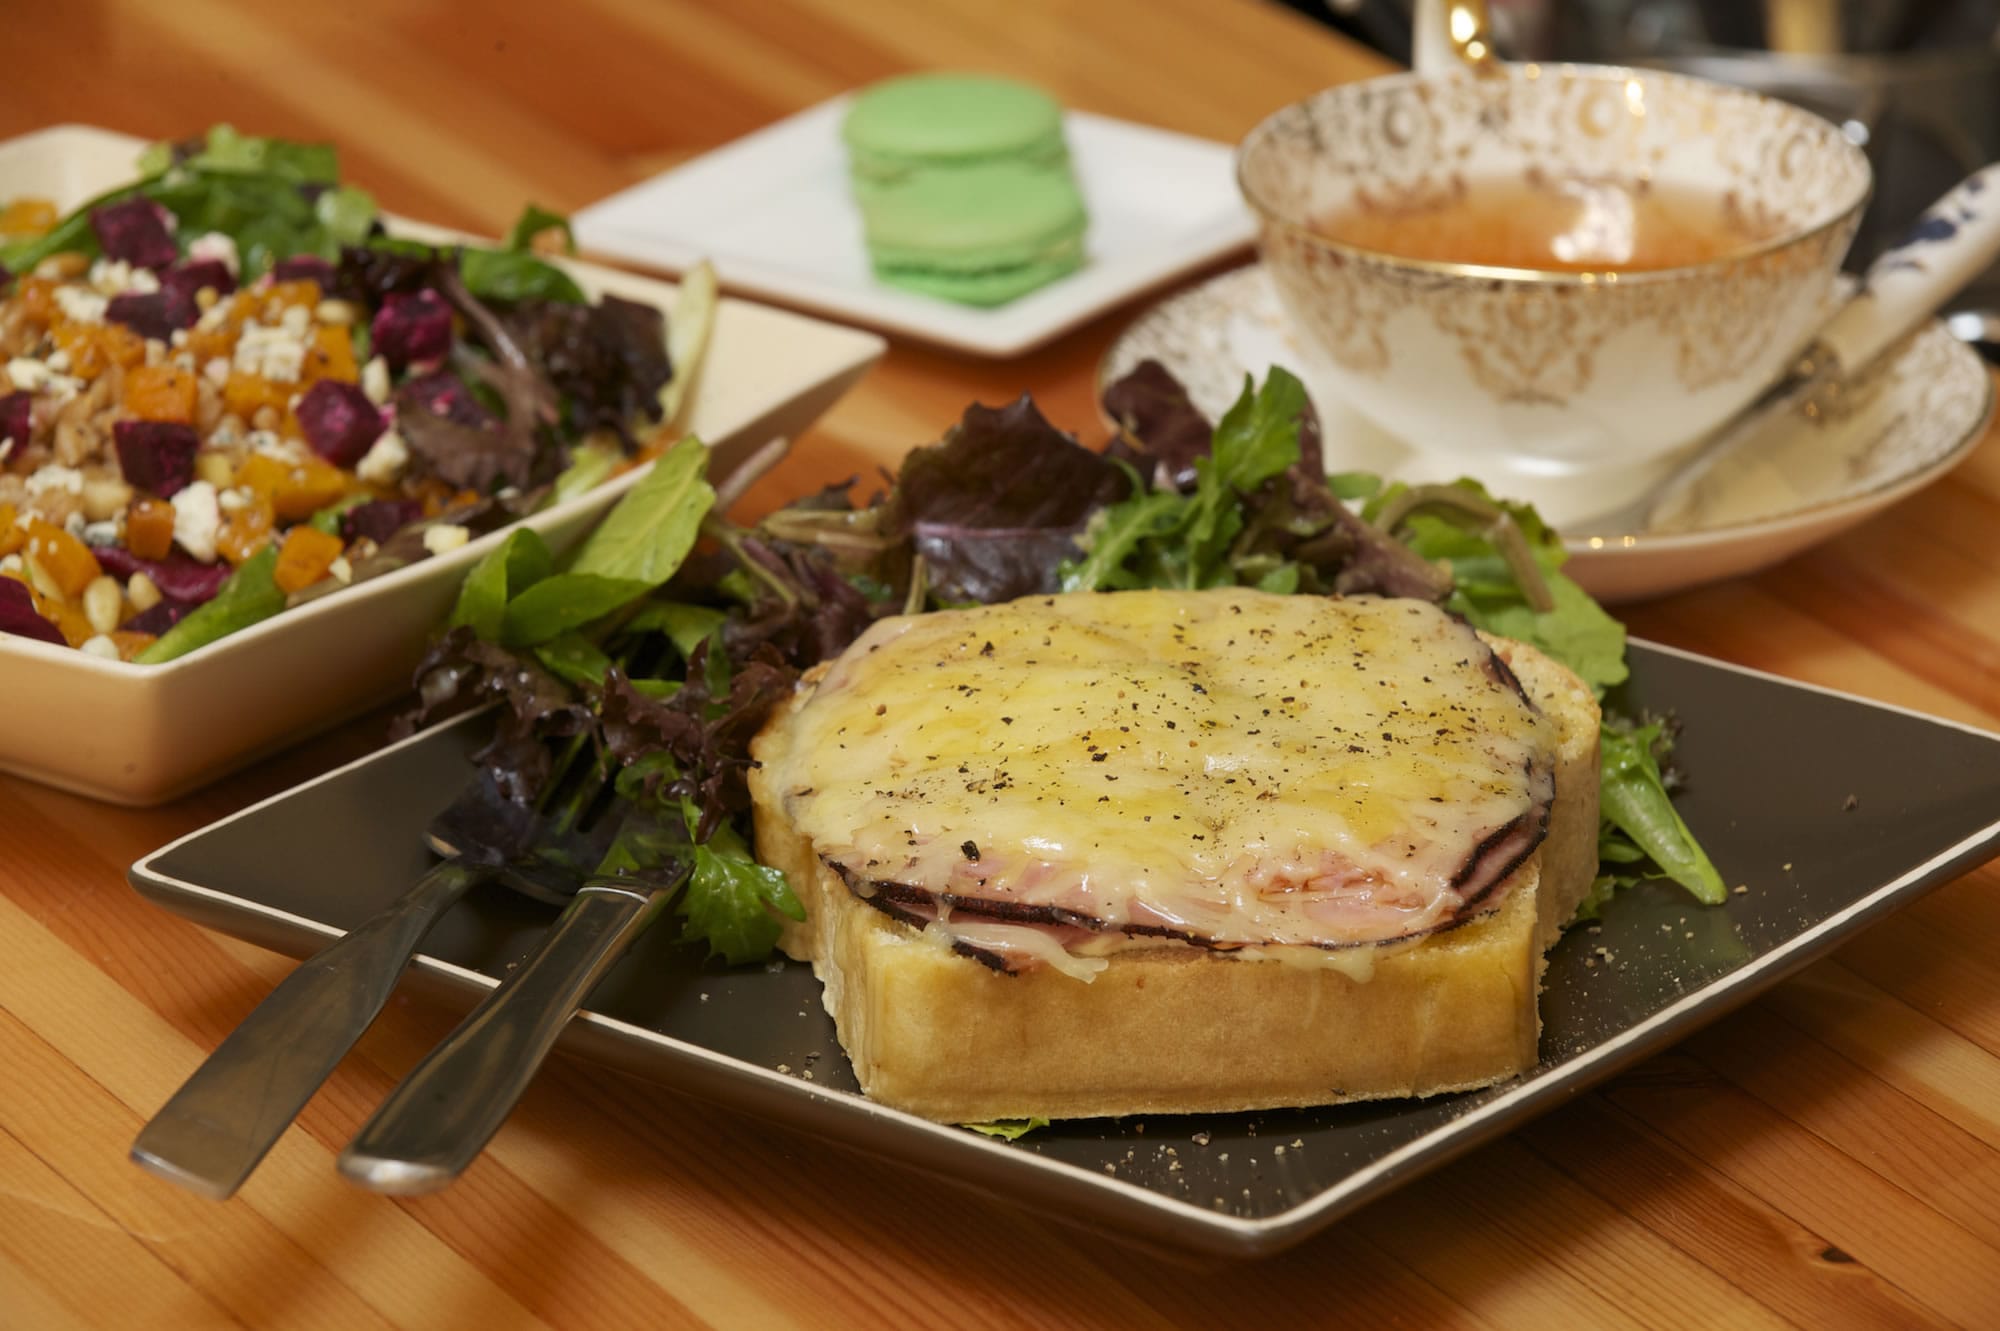 A Croque Monsieur sandwich with beet, butternut squash, gorgonzola and pine nut salad, tea and pistachio macaron is served at C'est la vie.